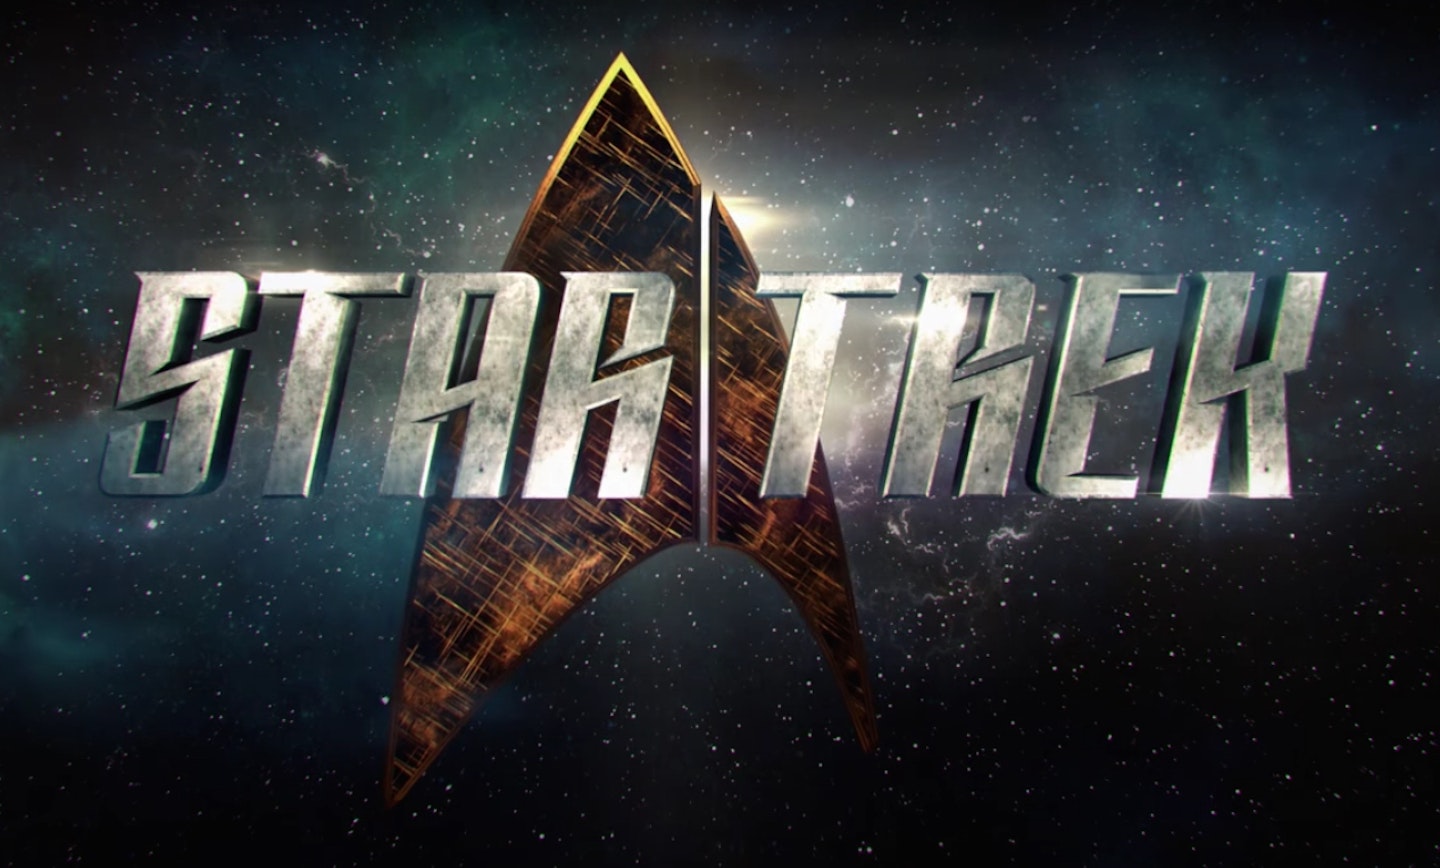 Star Trek 2017 TV series